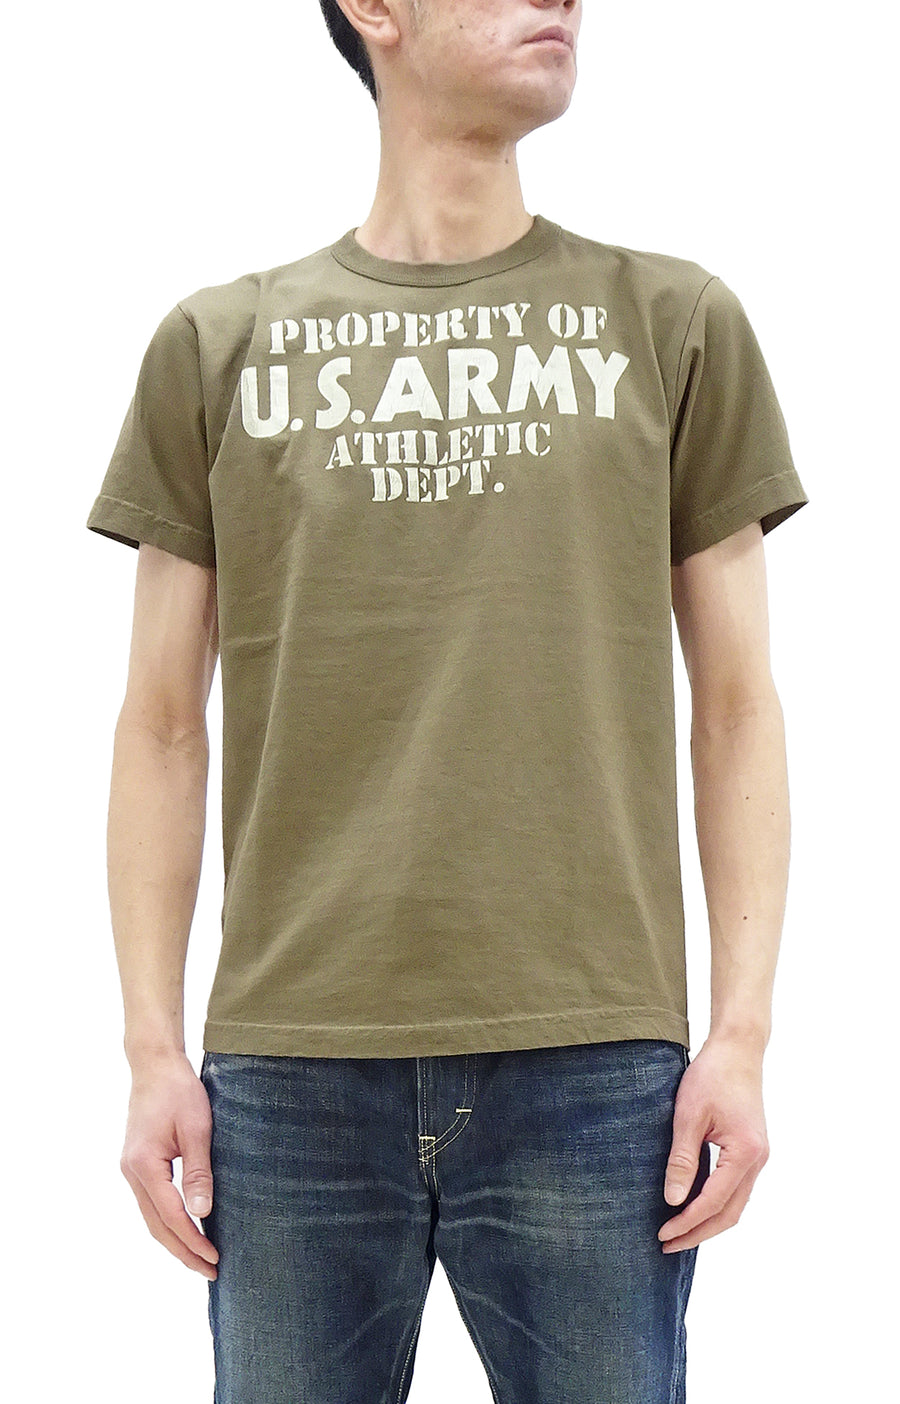 Buzz Rickson T-shirt Men's U.S. Army Athletic Department Military 